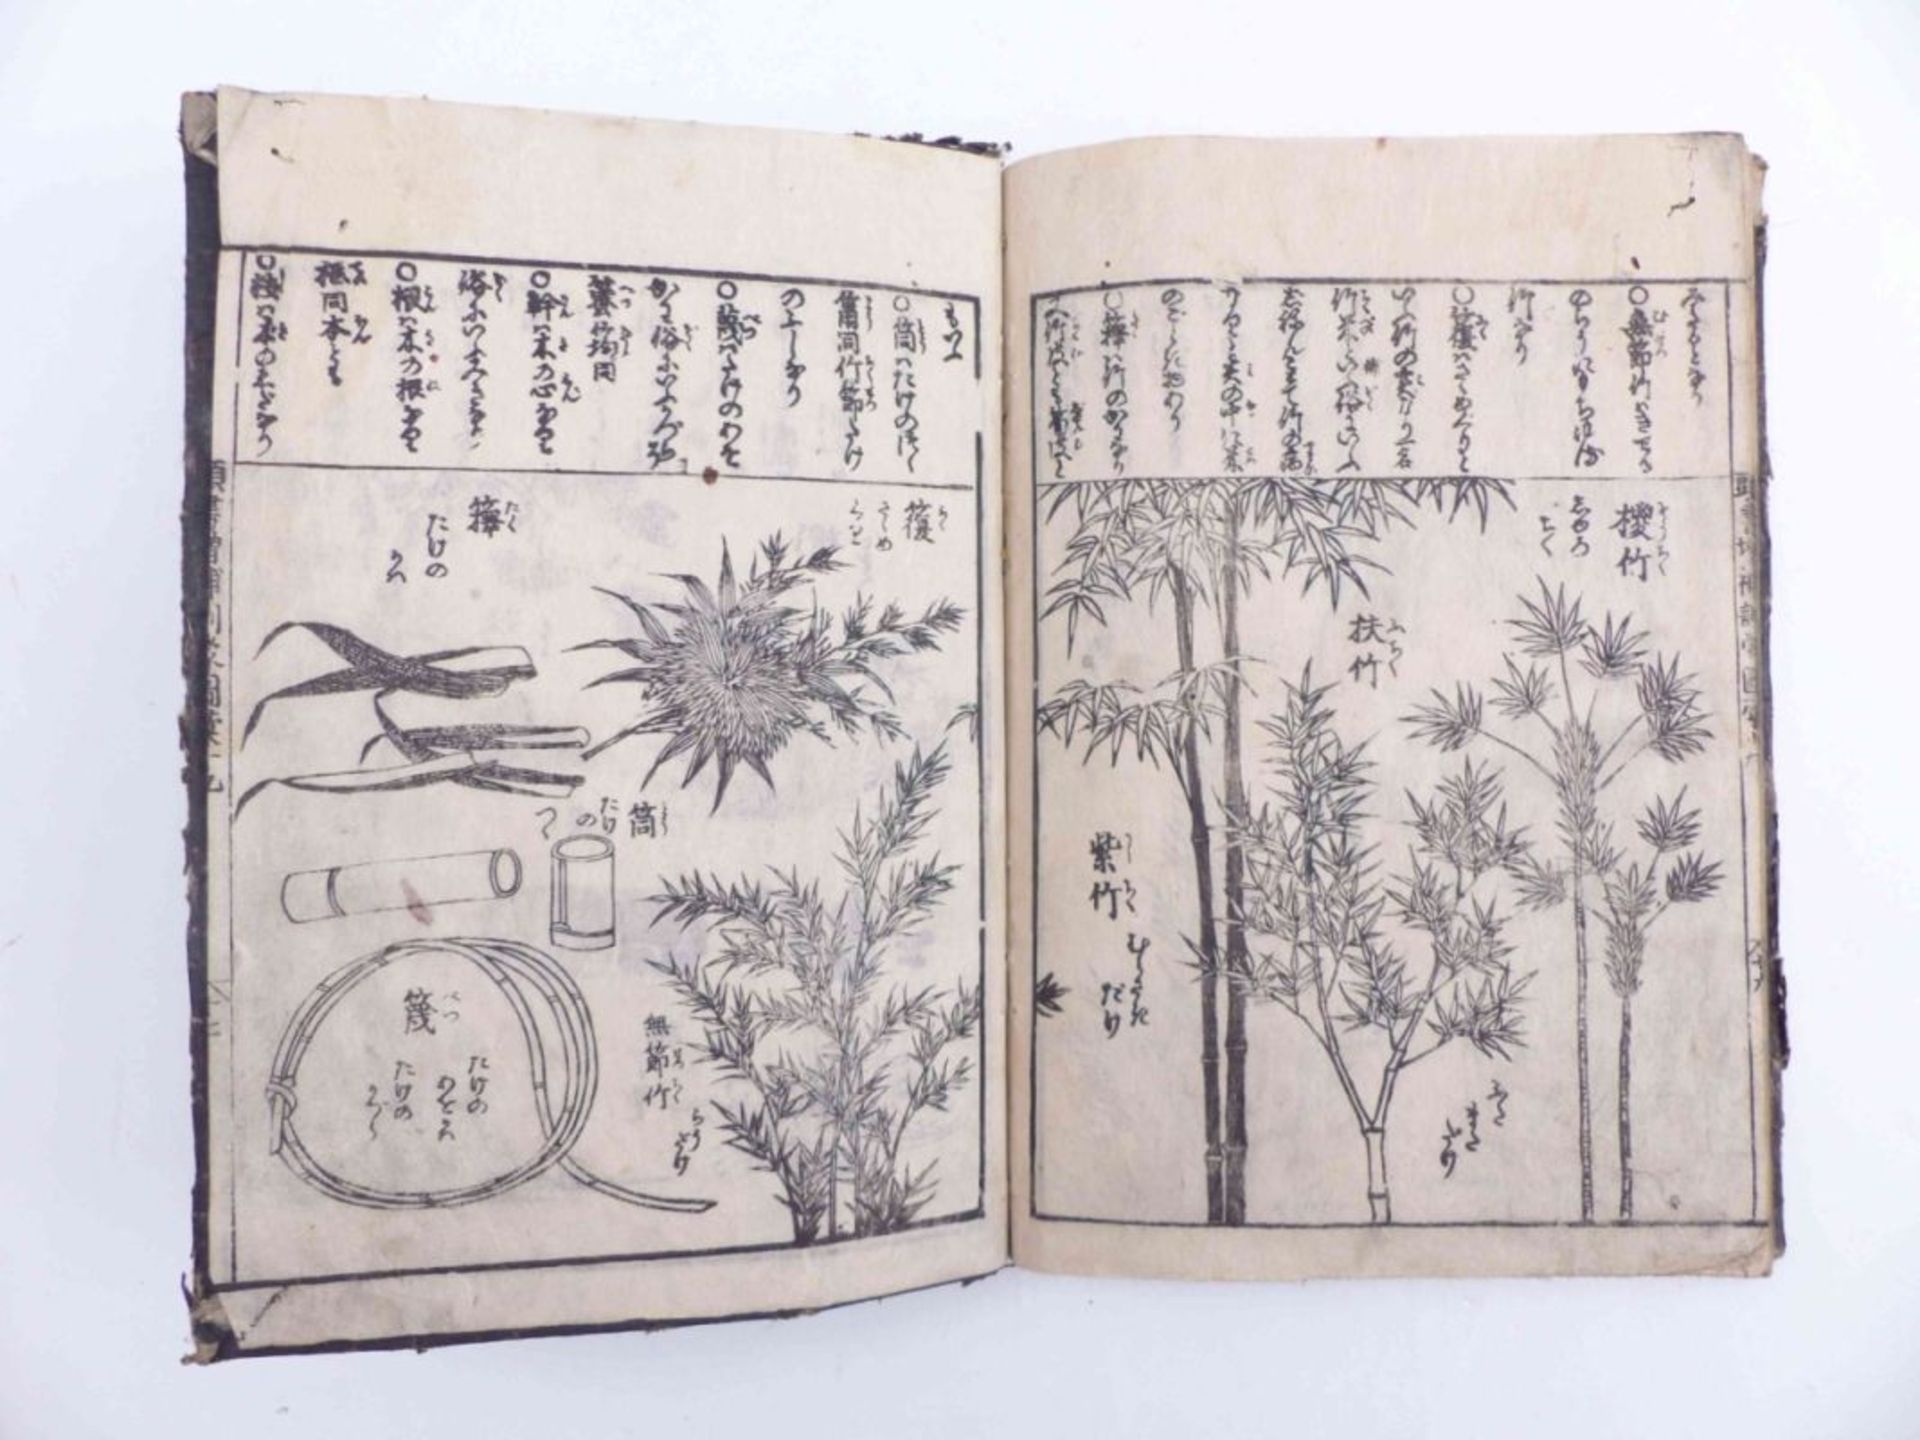 Dreibändige Enzyklopädie, Japan, 19. Jh. - Image 16 of 22